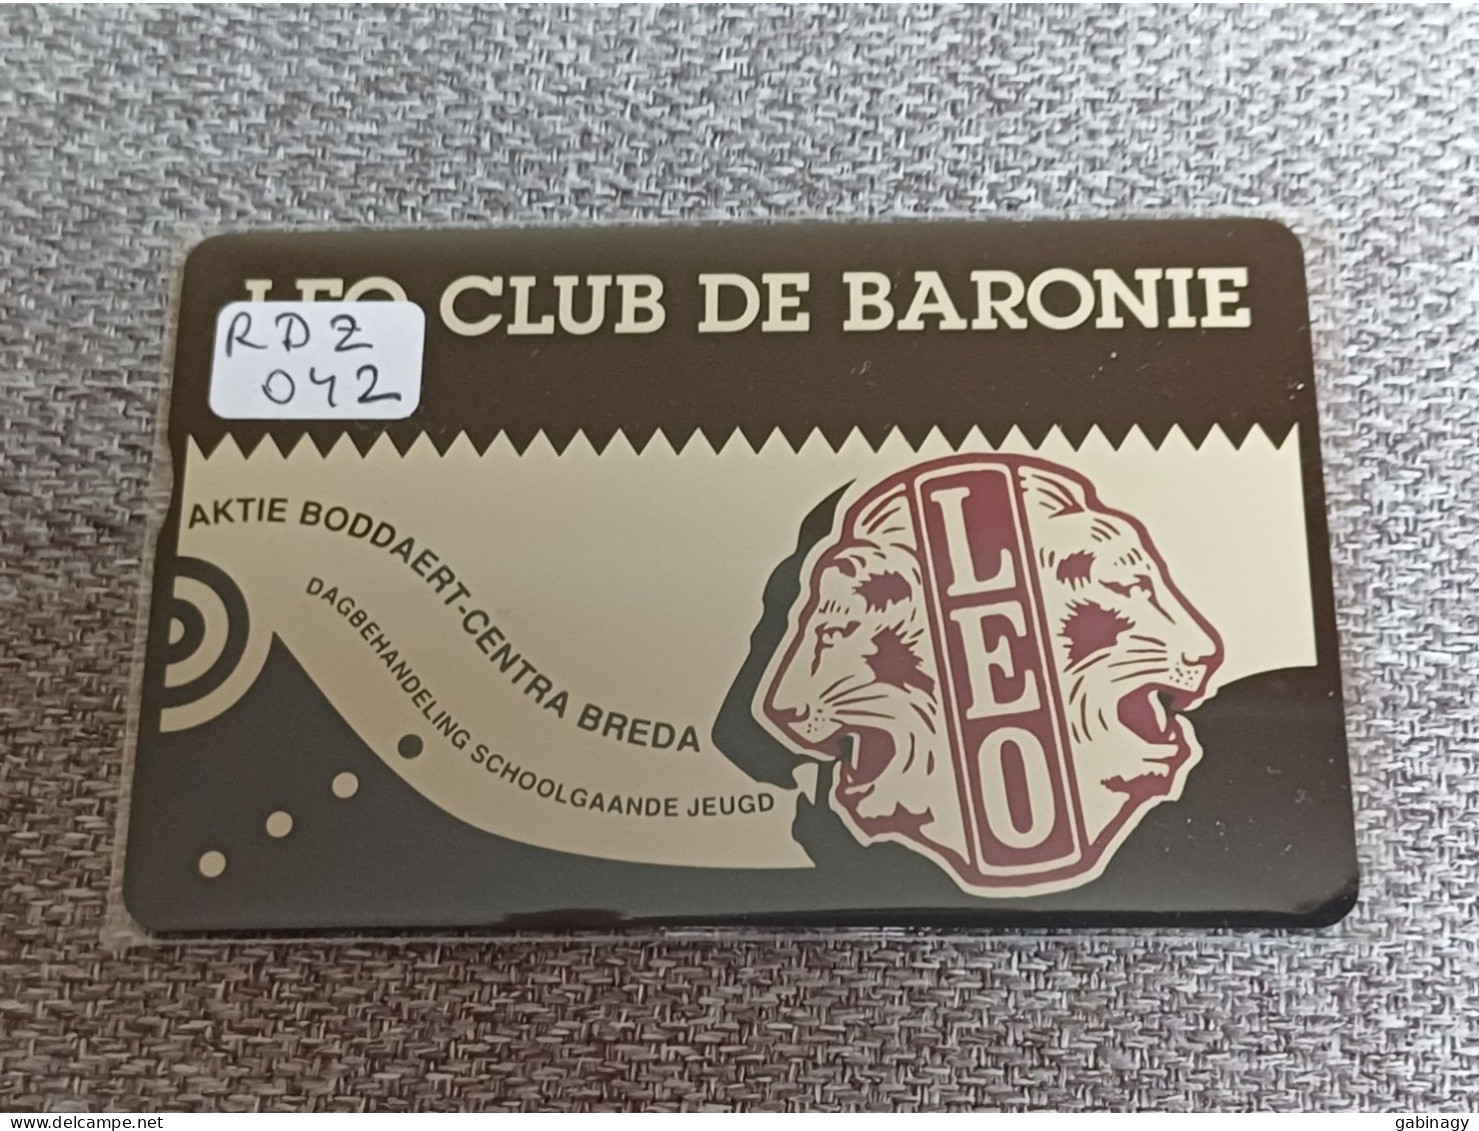 NETHERLANDS - RDZ042 - Leo Club De Baronie - 1.000 EX. - Privat